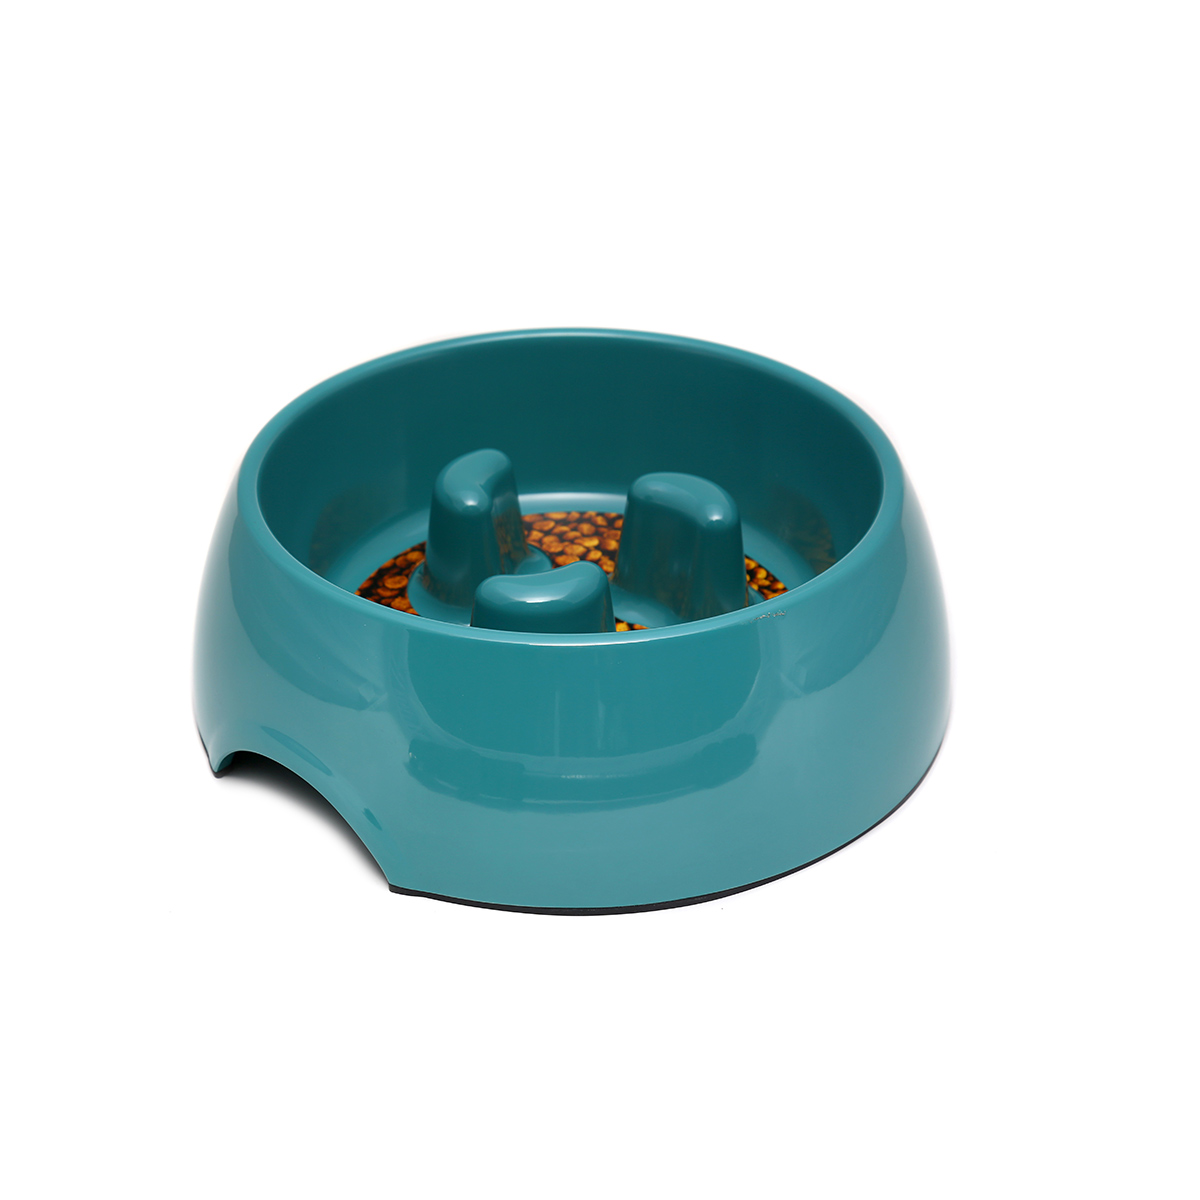 glass slow feeder dog bowl